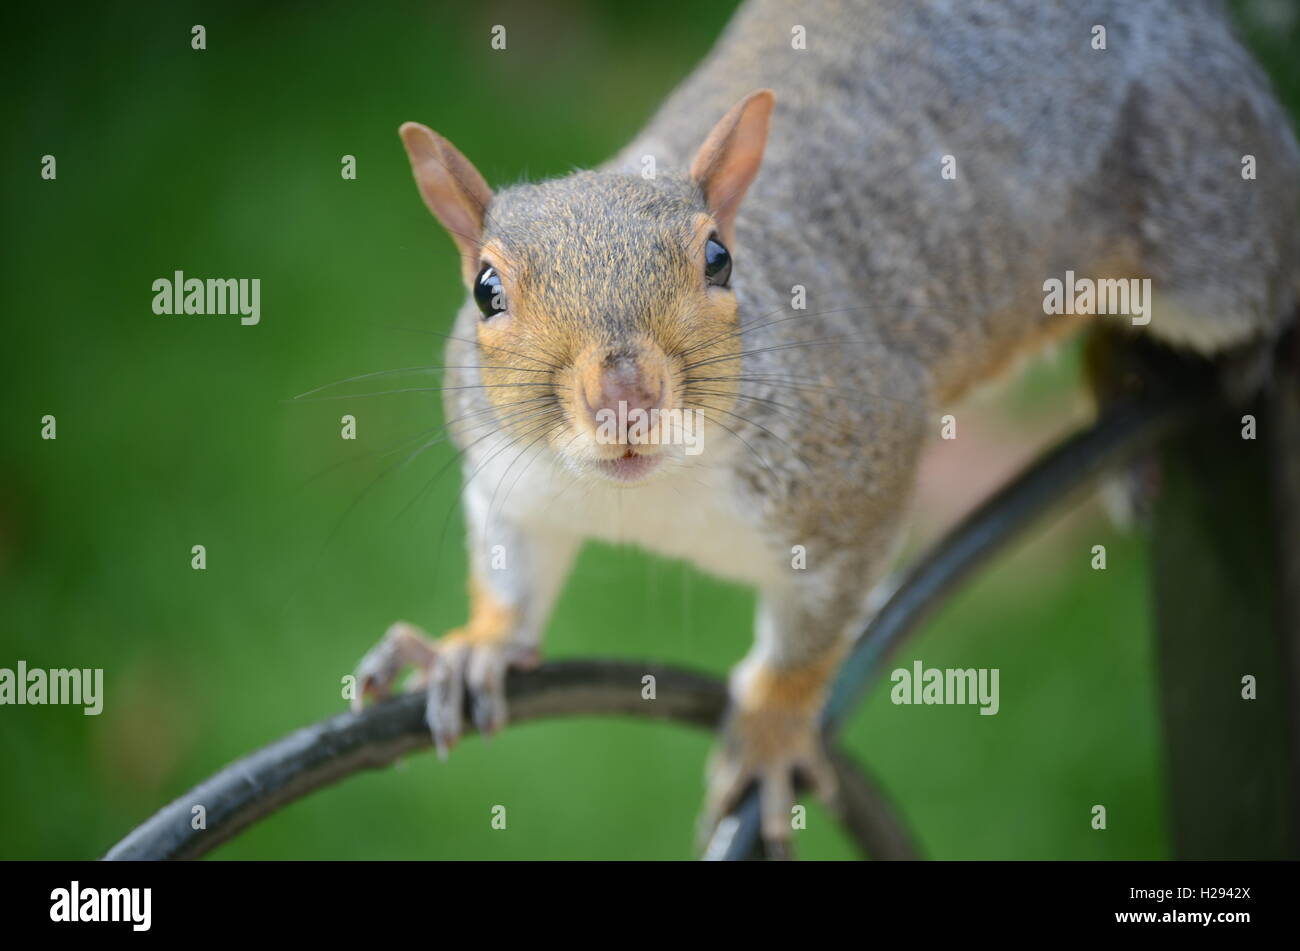 Squirrel poses on railings Stock Photo